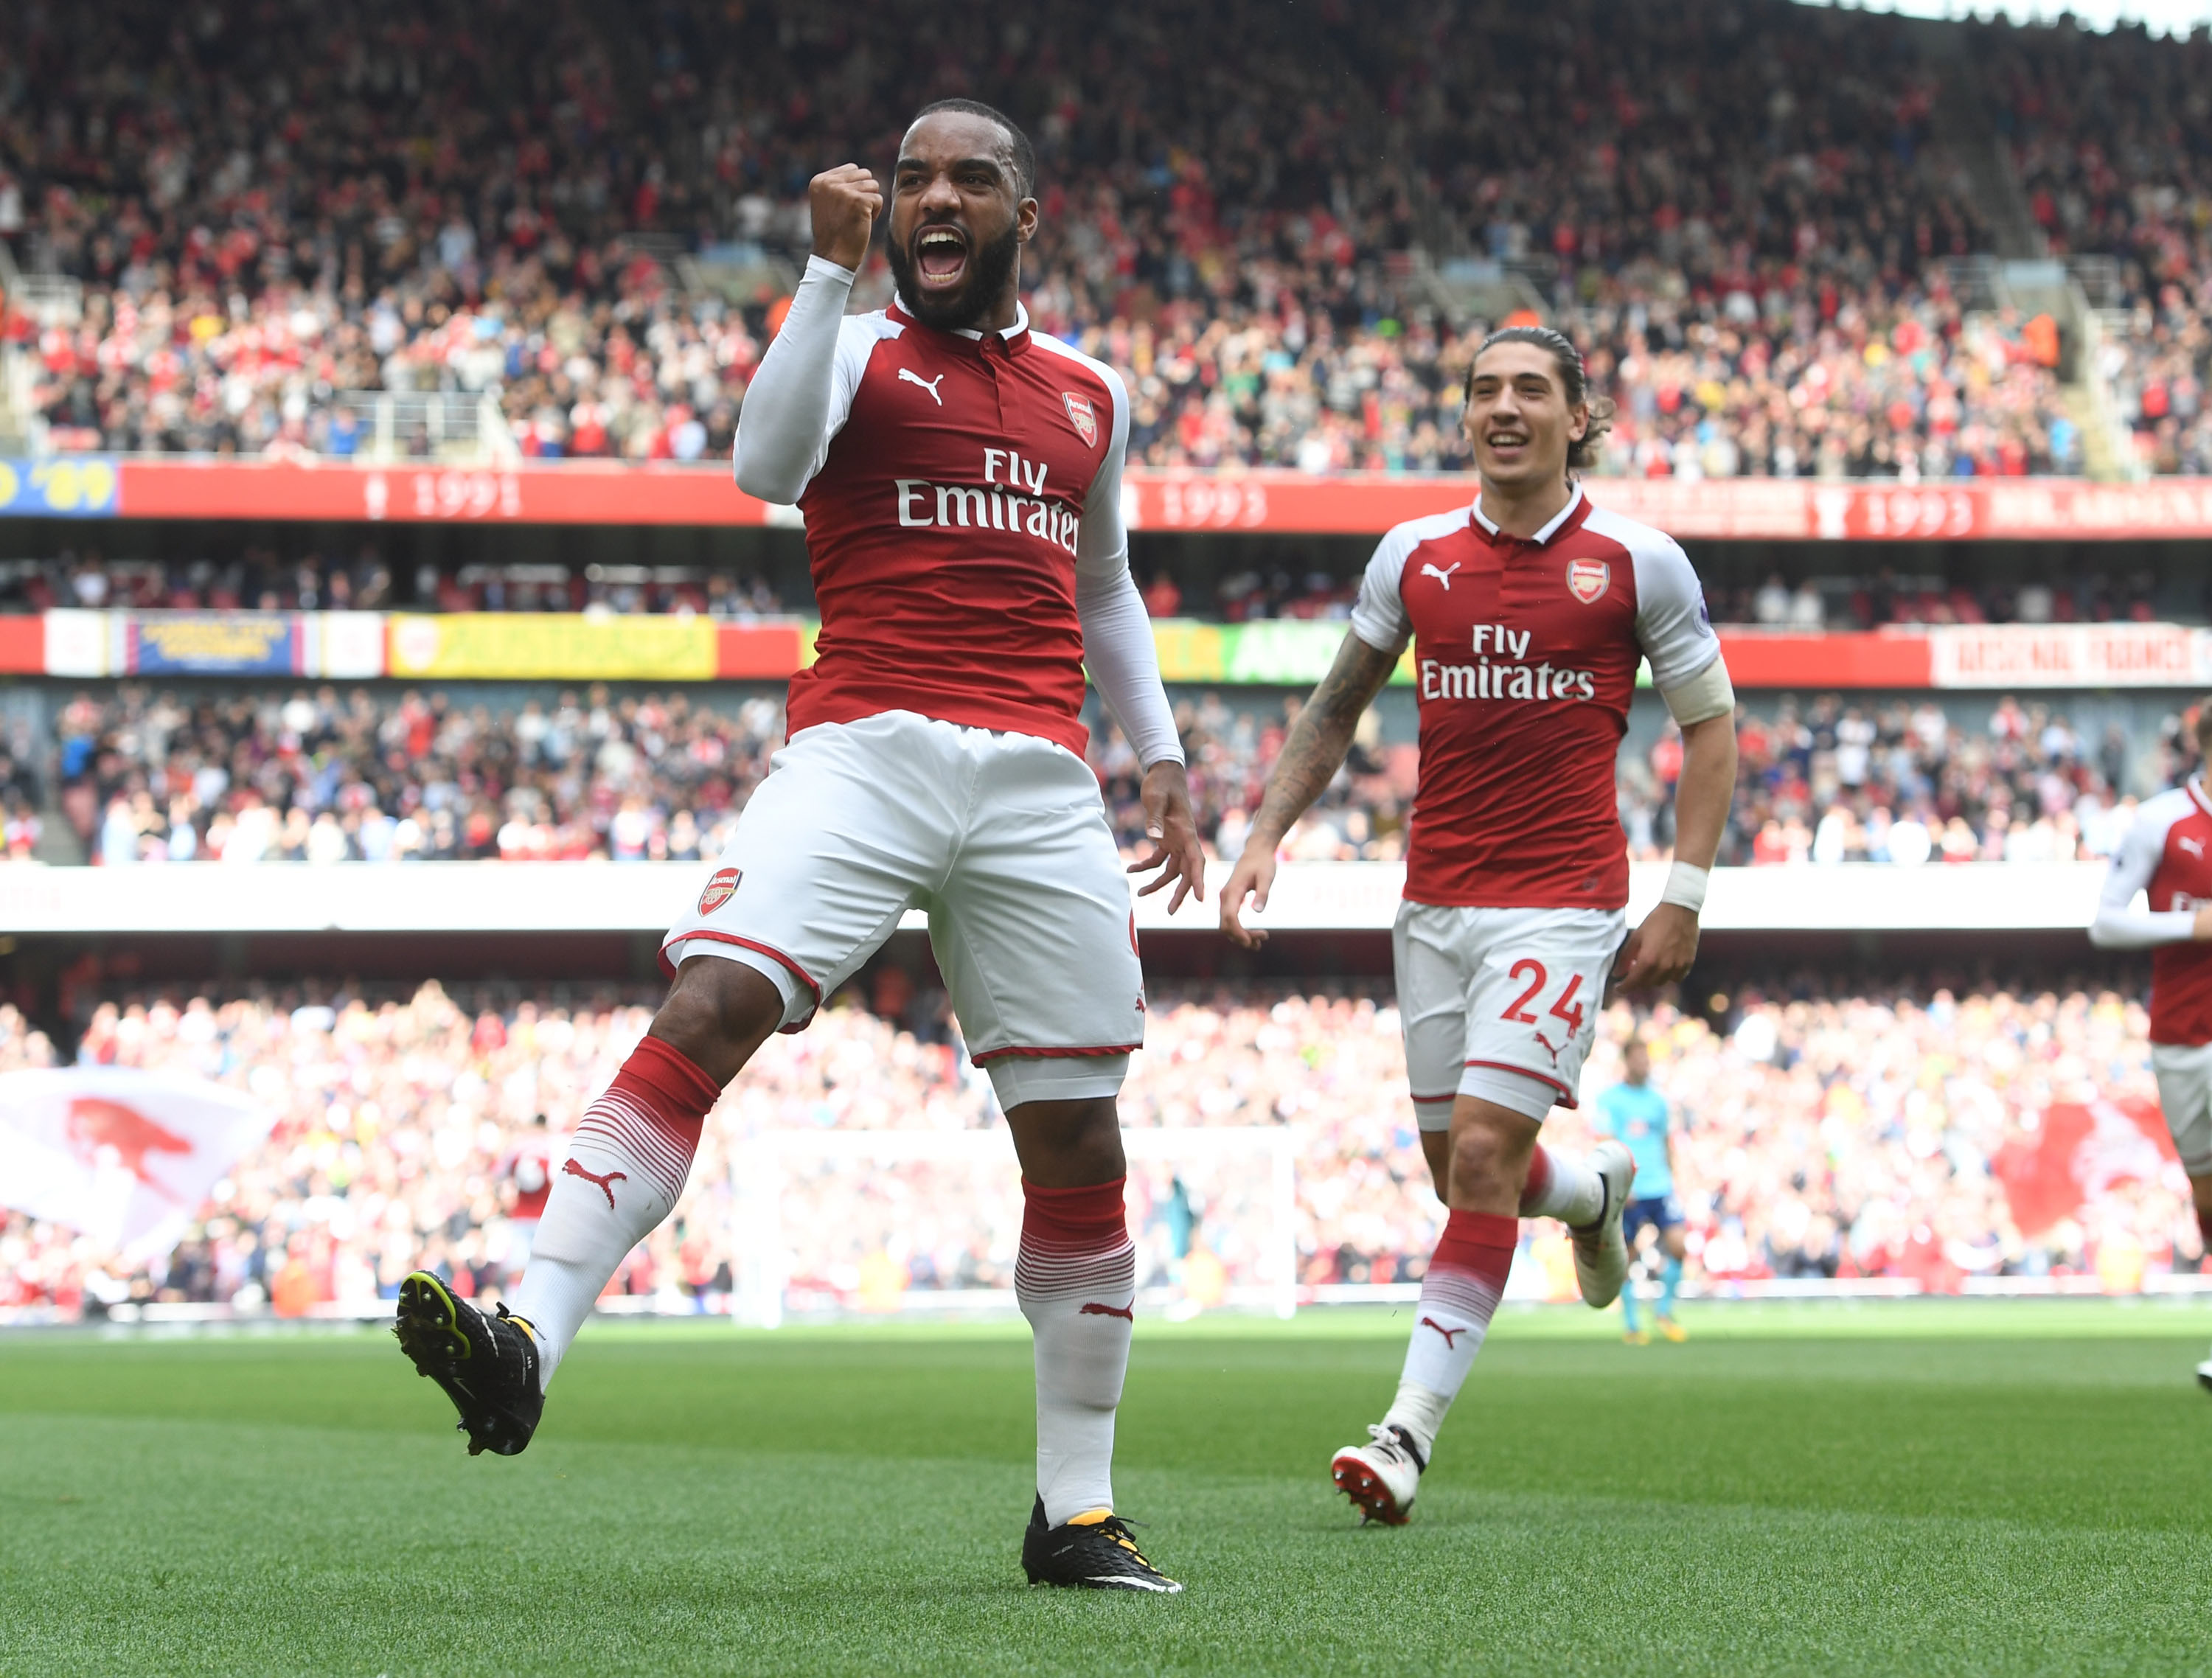 Arsenal striker Alexandre Lacazette celebrates after scoring a goal during a Premier League football match